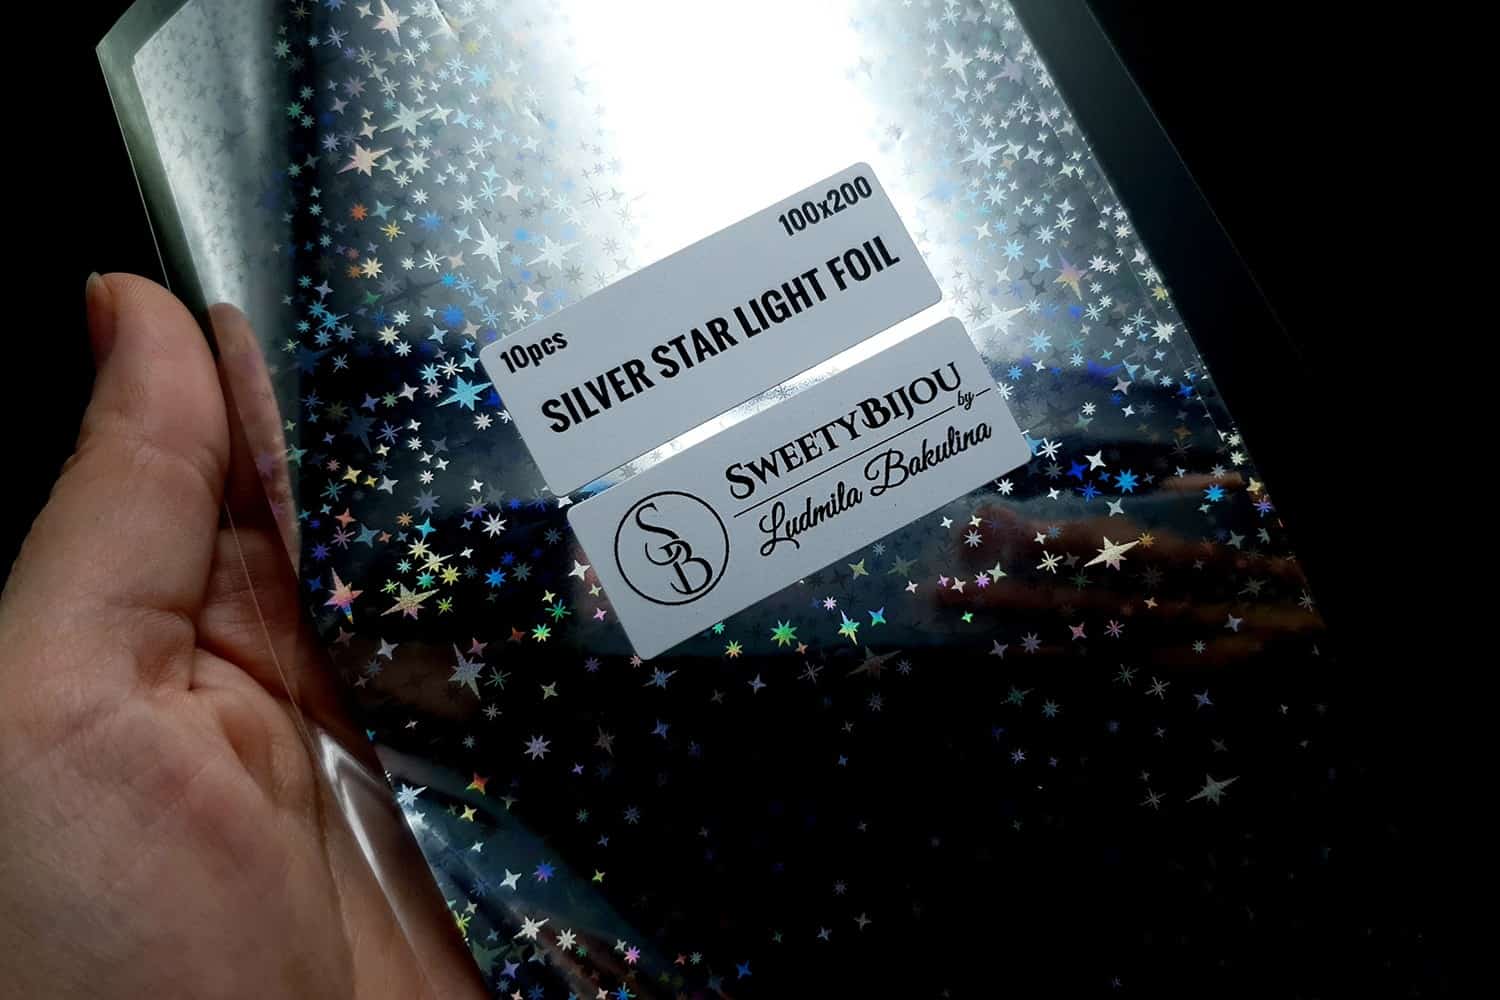 Silver Star Light Foil (10 pcs) (12330)